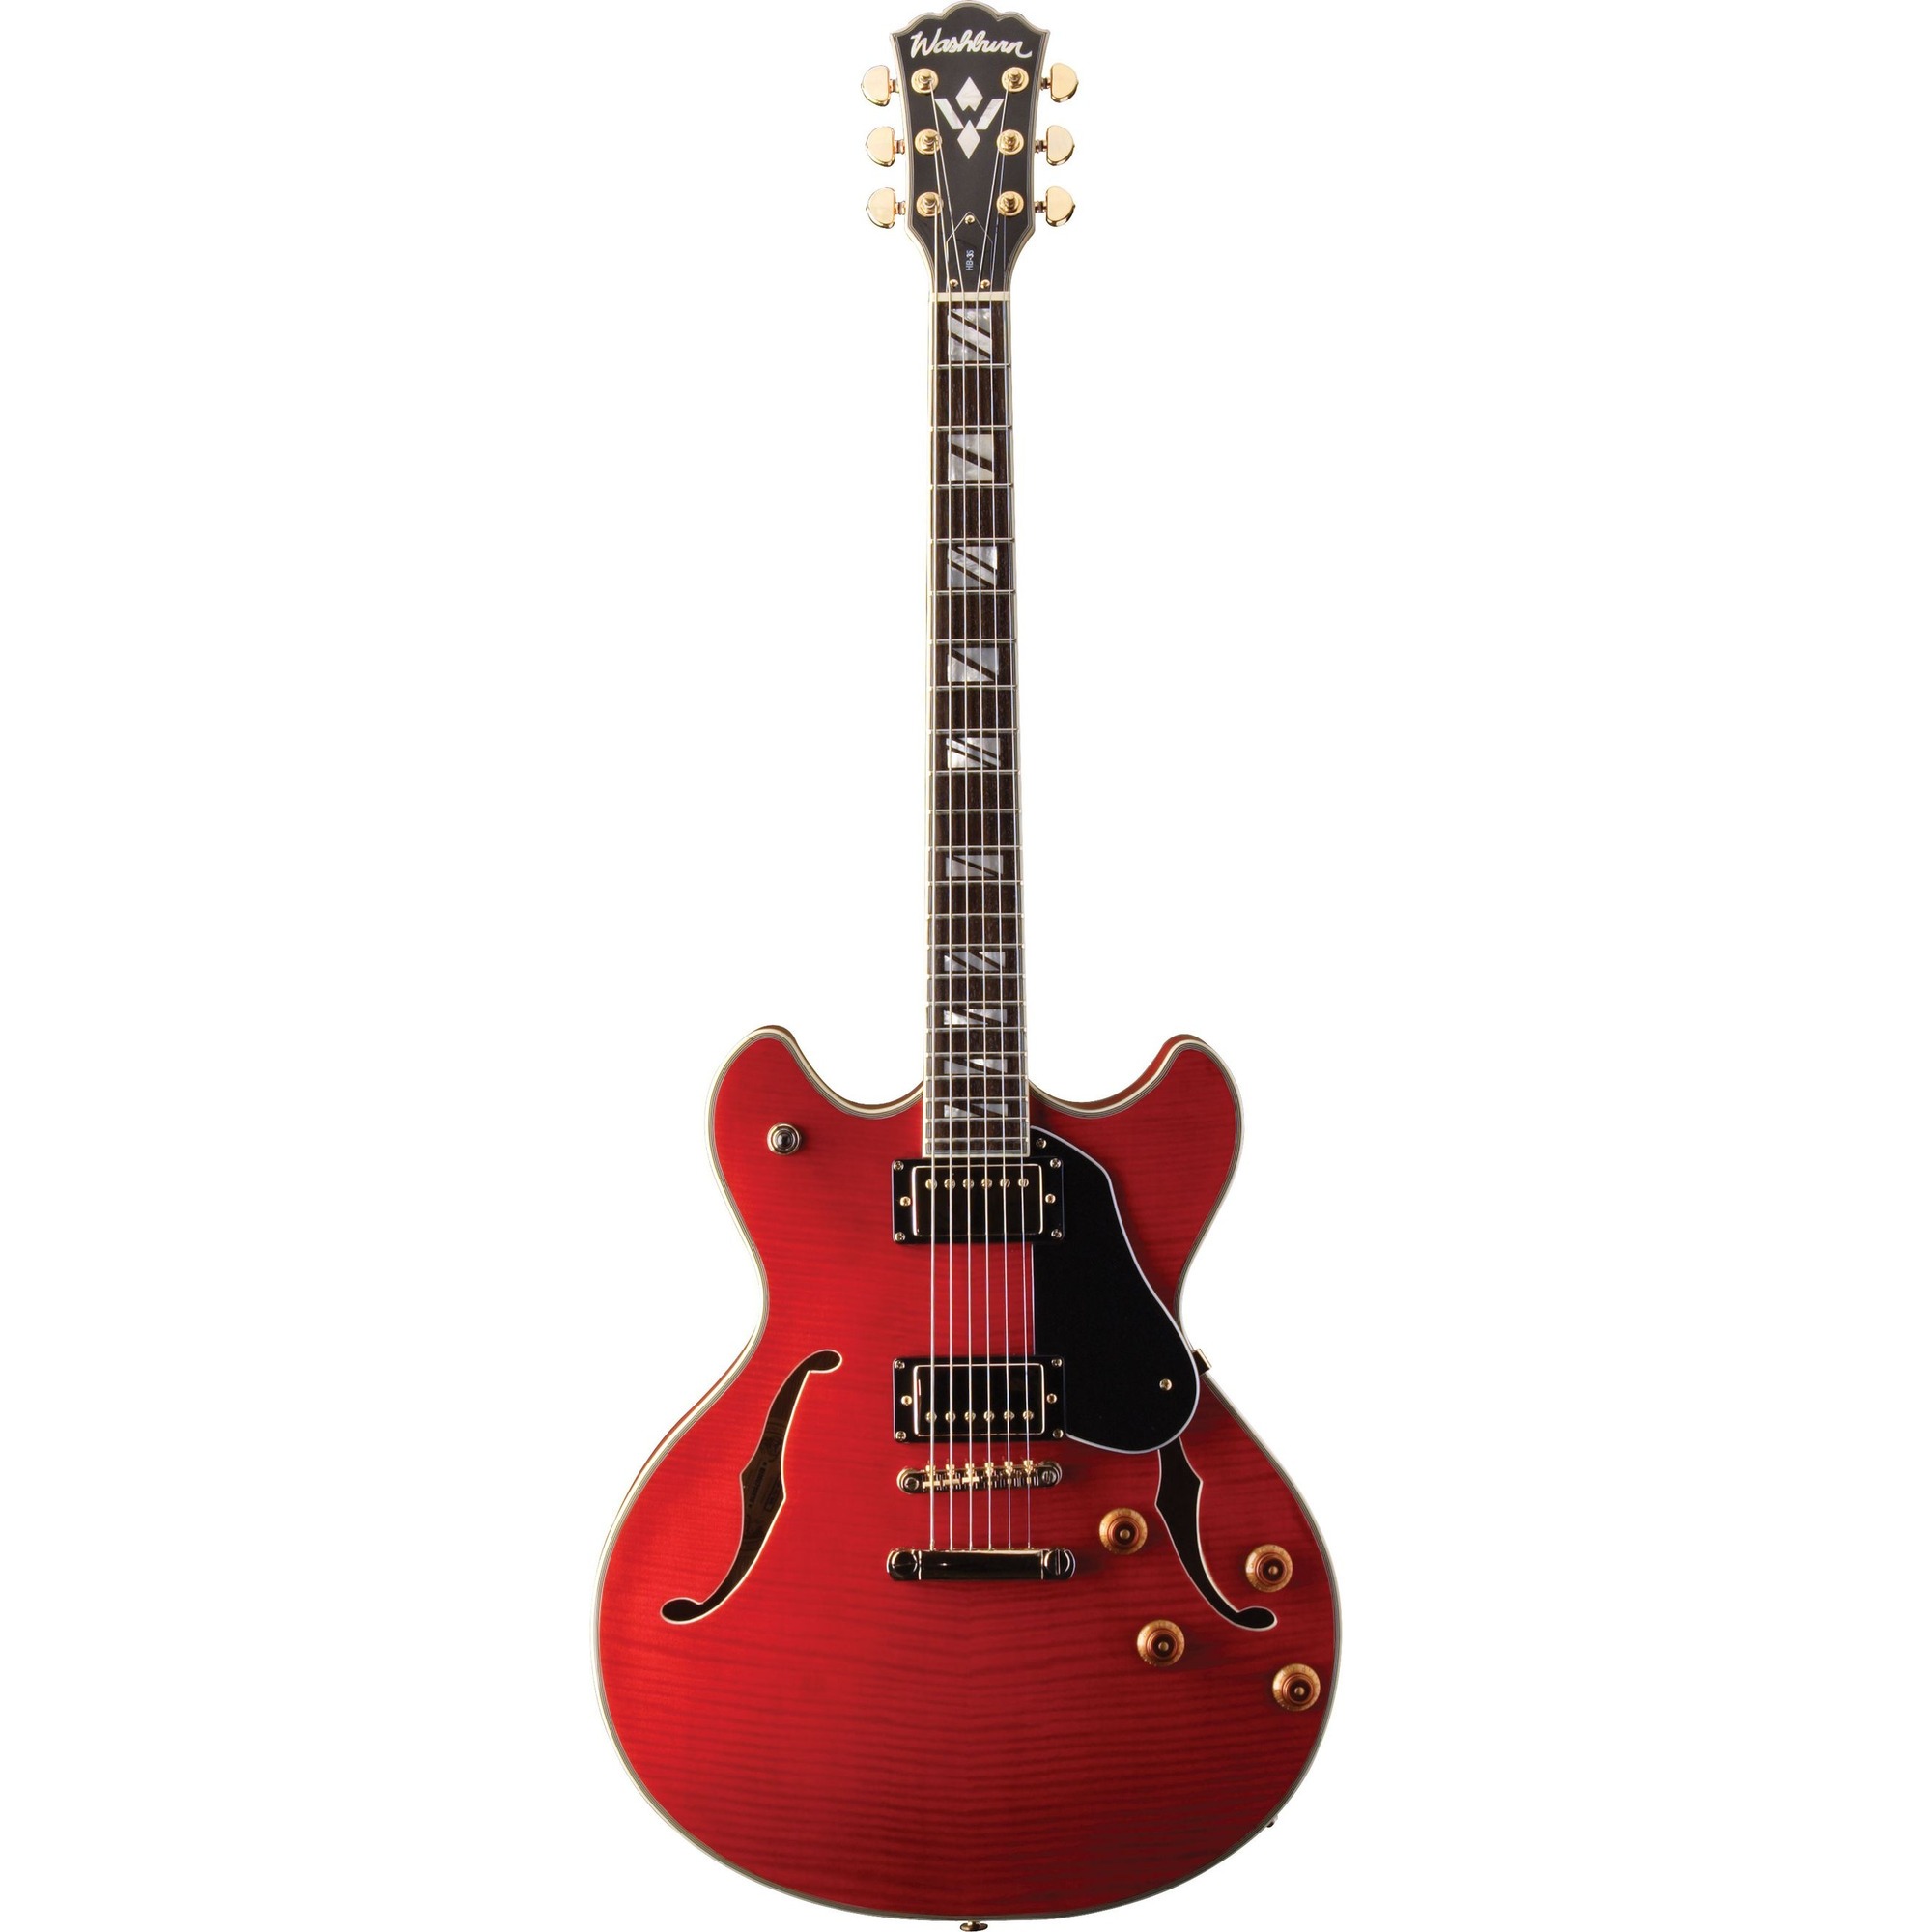 Полуакустическая электрогитара. Gretsch g2622-p90. Полуакустическая гитара Epiphone Riviera Custom p93. Полуакустическая гитара Gretsch g5420t Electromatic Hollow body. Gibson 335.